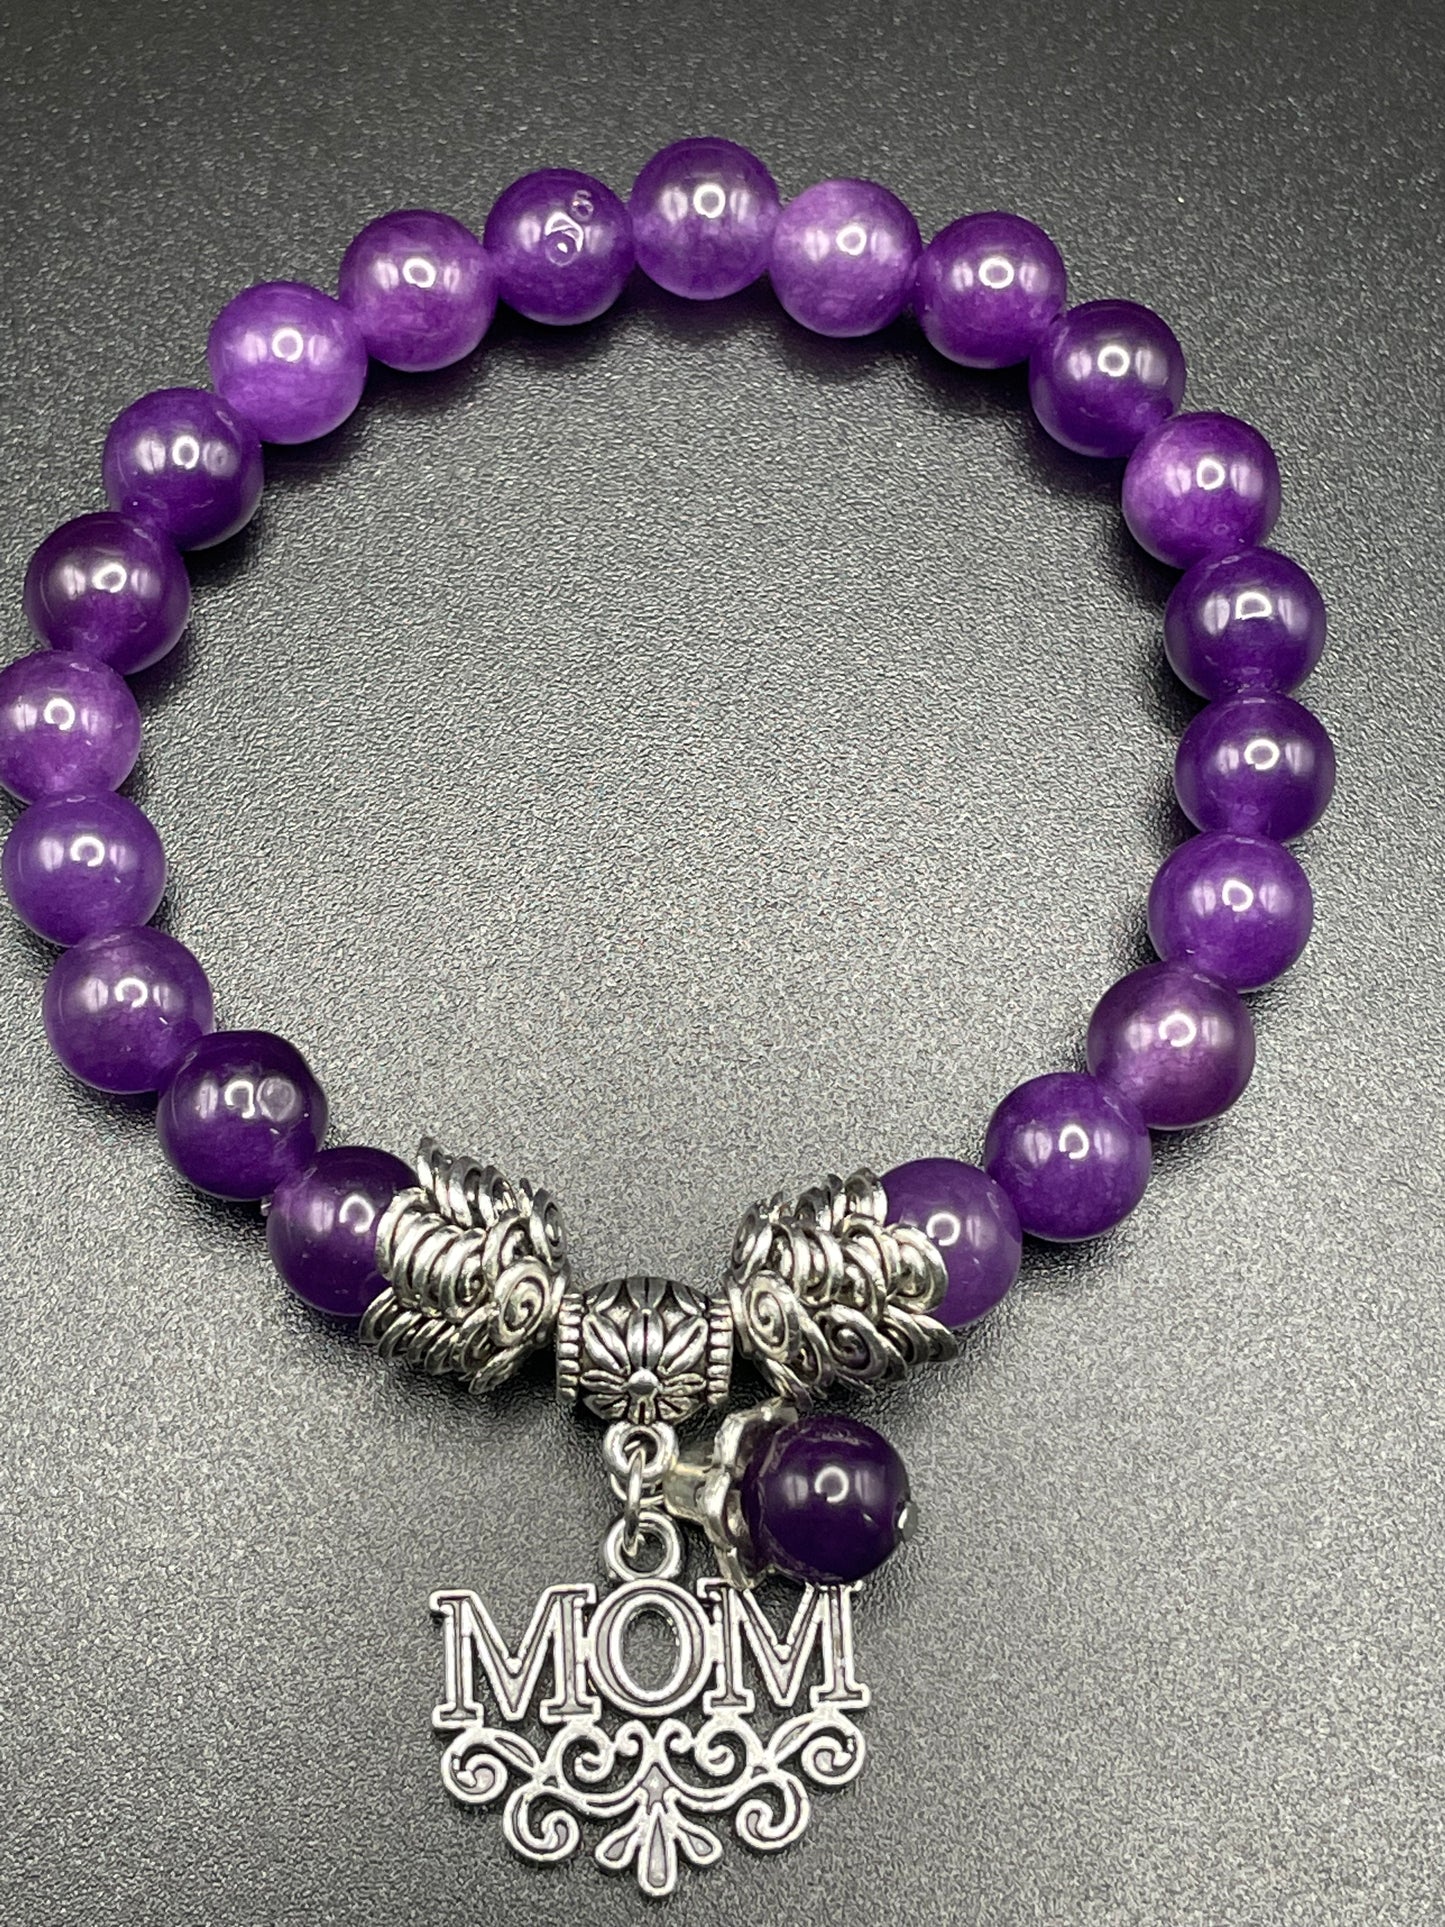 Mother’s Day “Mom” Amethyst charm bracelet